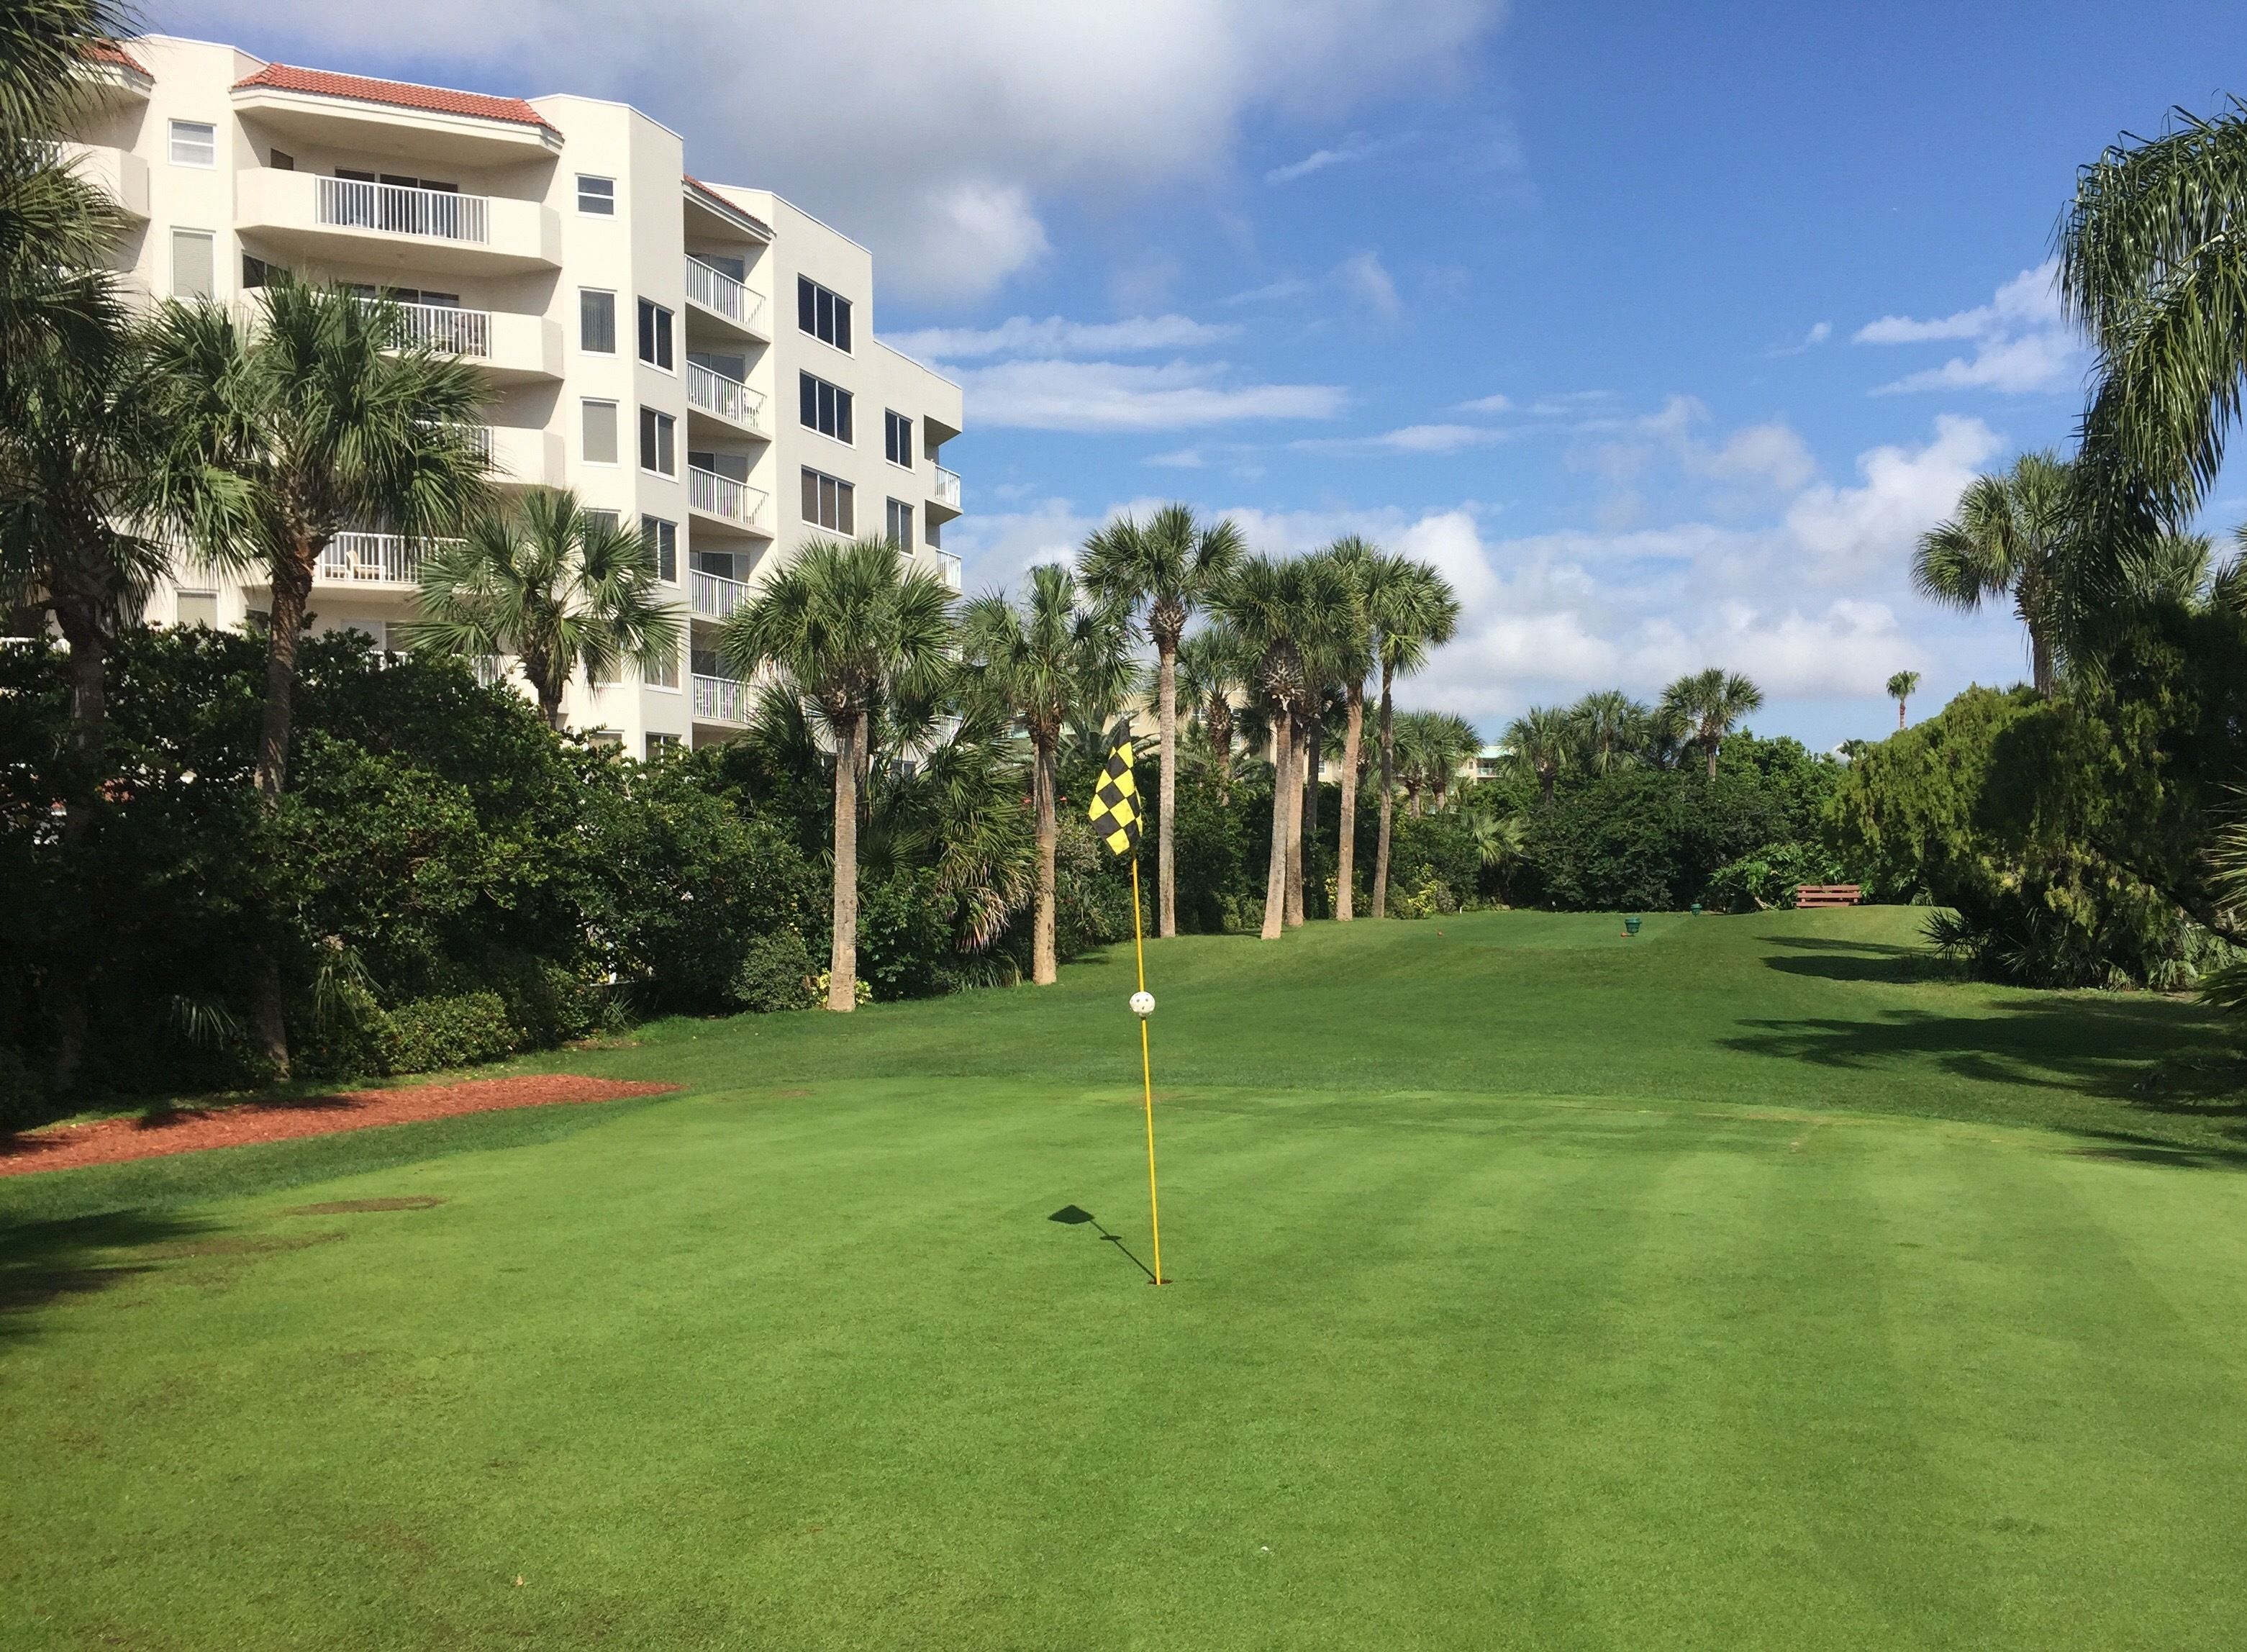 Daytona Beach public golf course